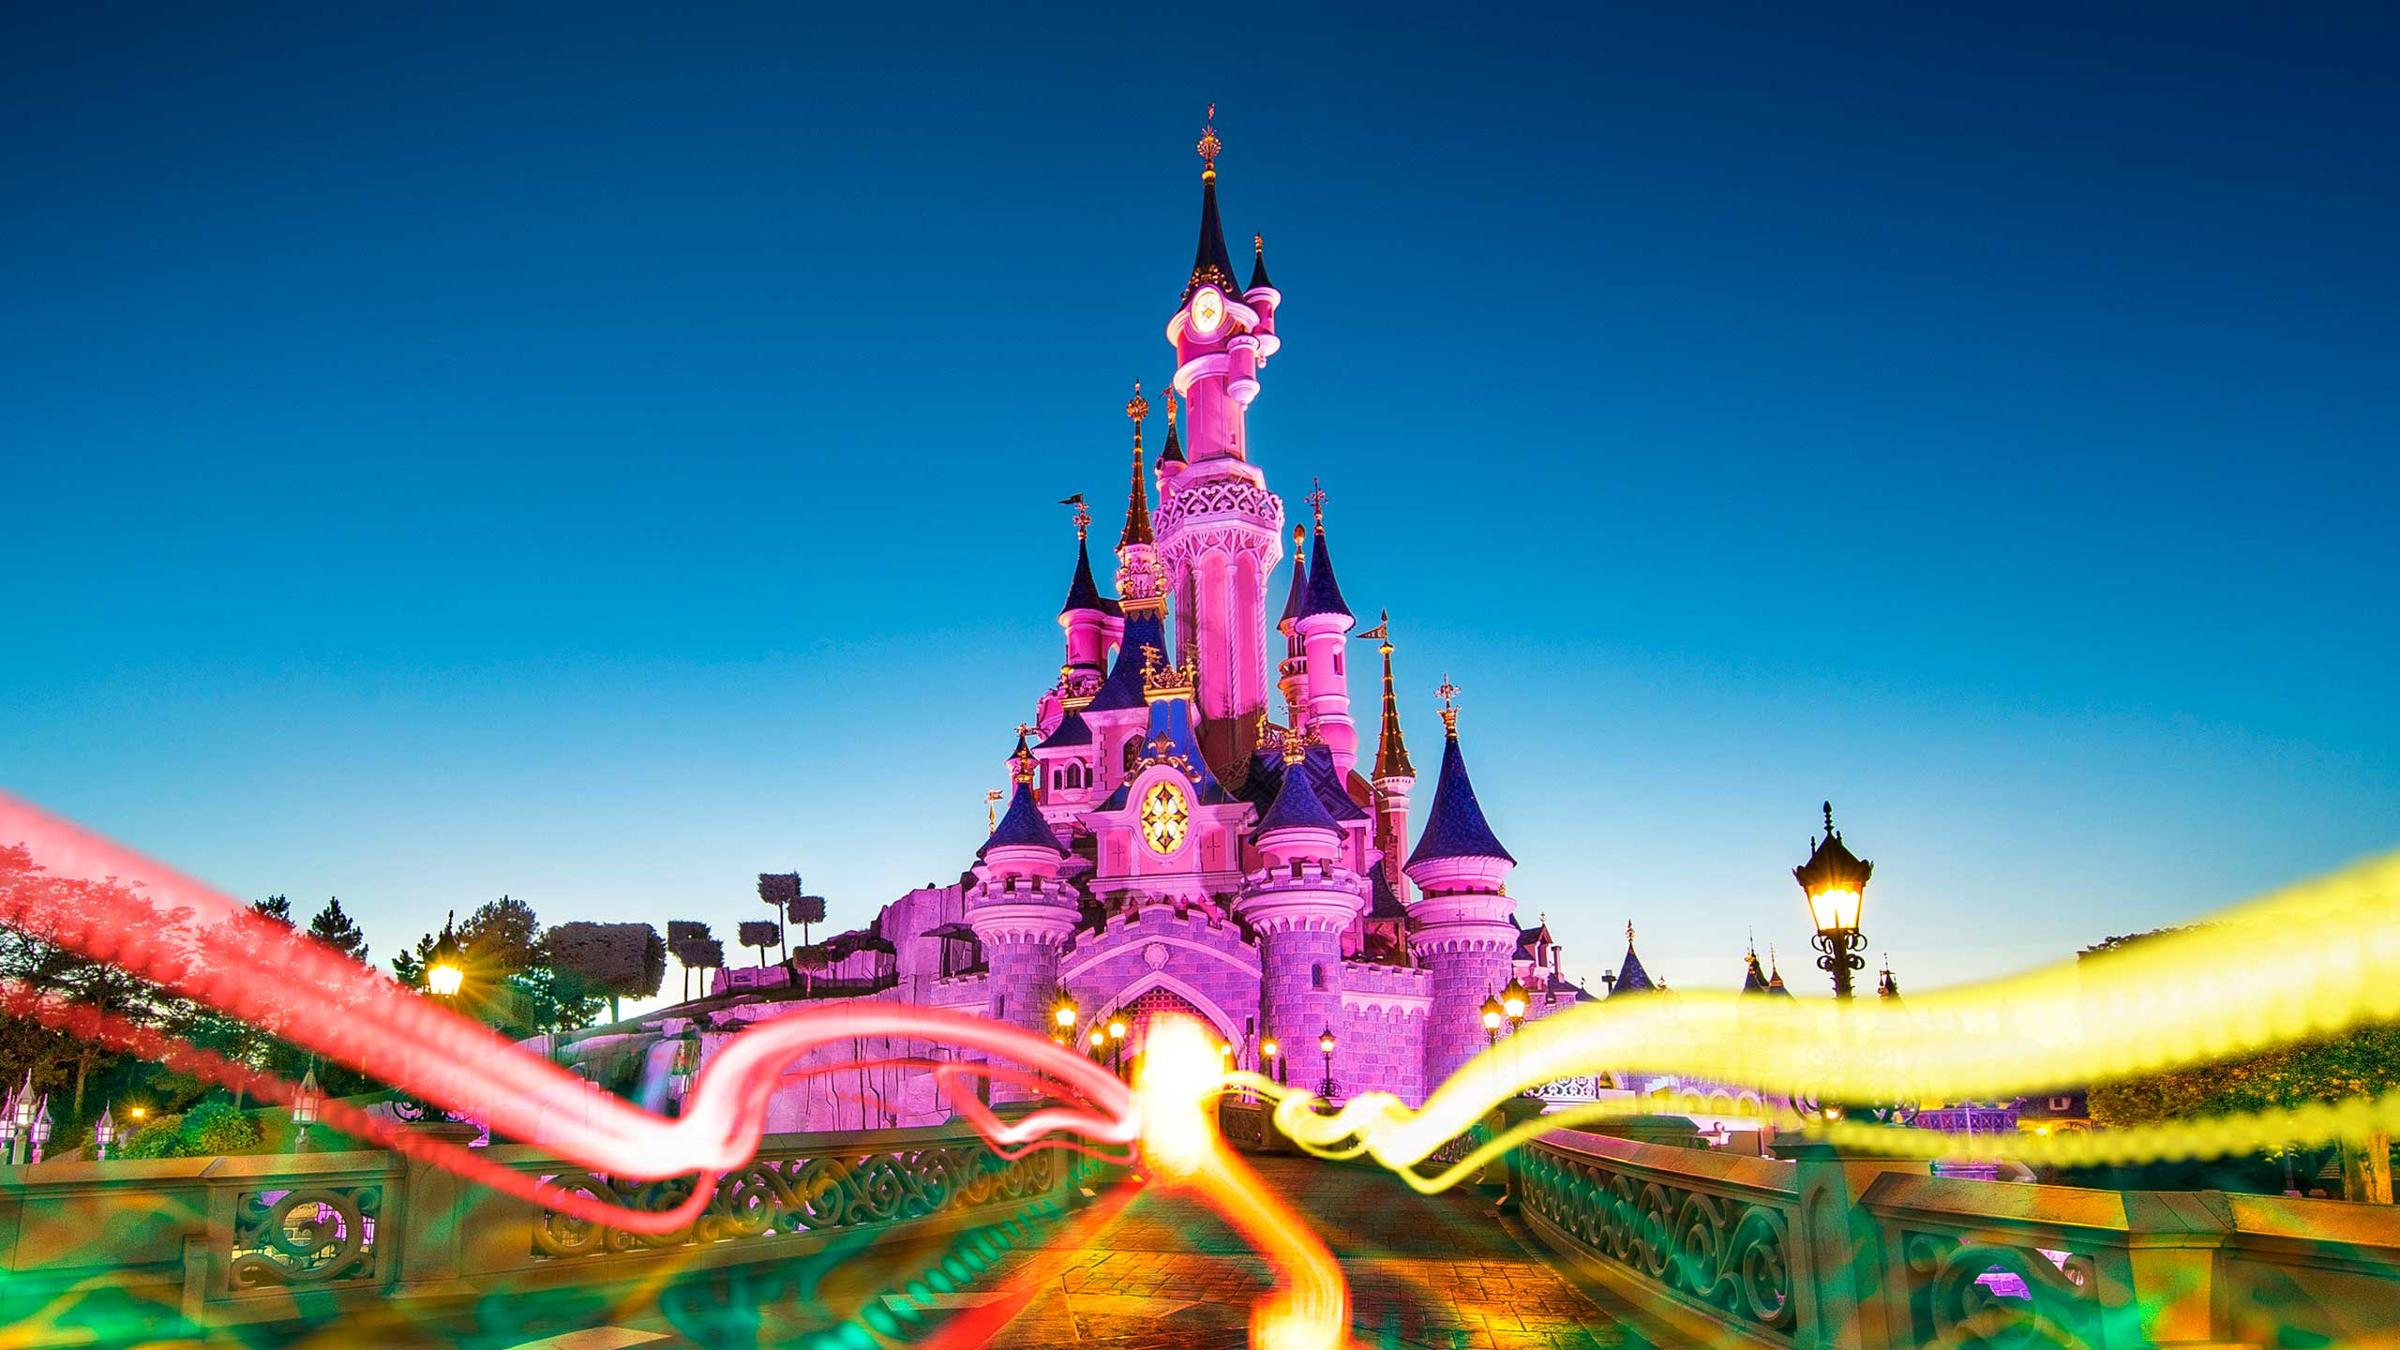 Travel further than you ever imagined | Disneyland Paris